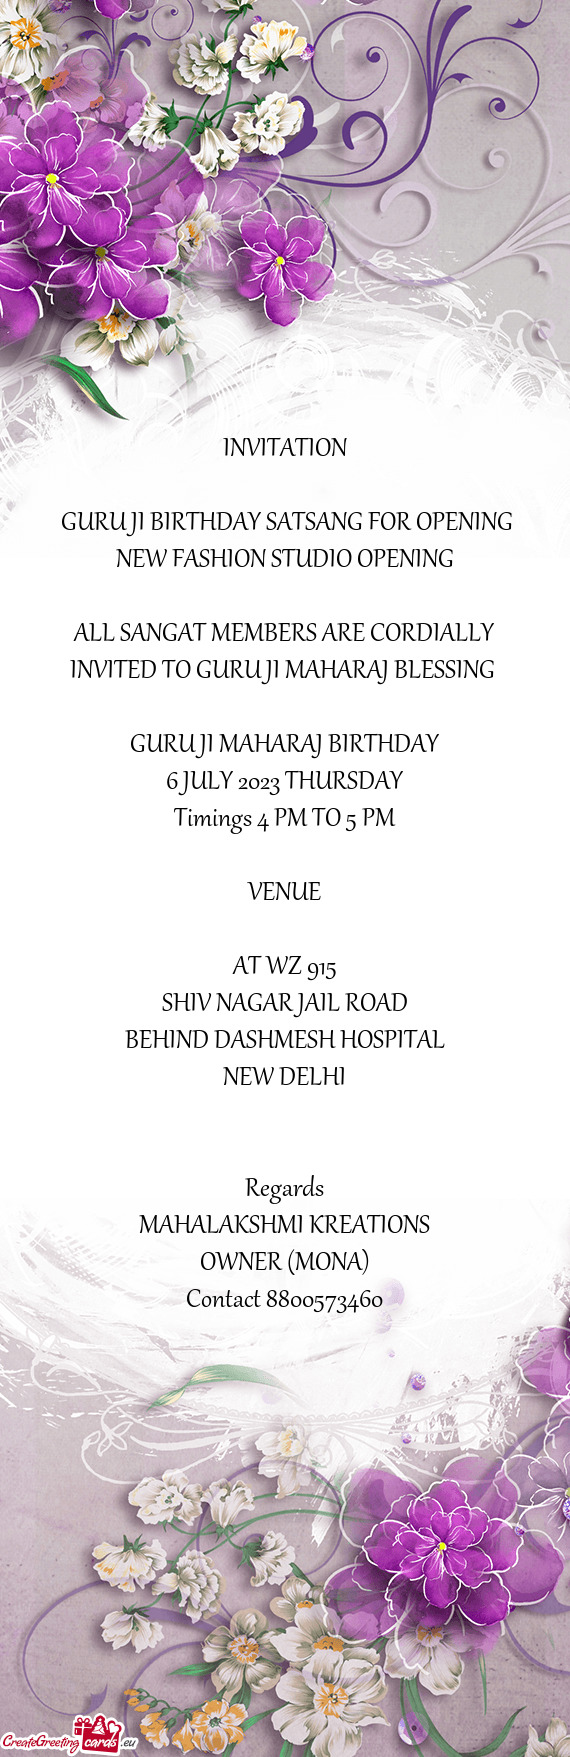 ALL SANGAT MEMBERS ARE CORDIALLY INVITED TO GURU JI MAHARAJ BLESSING